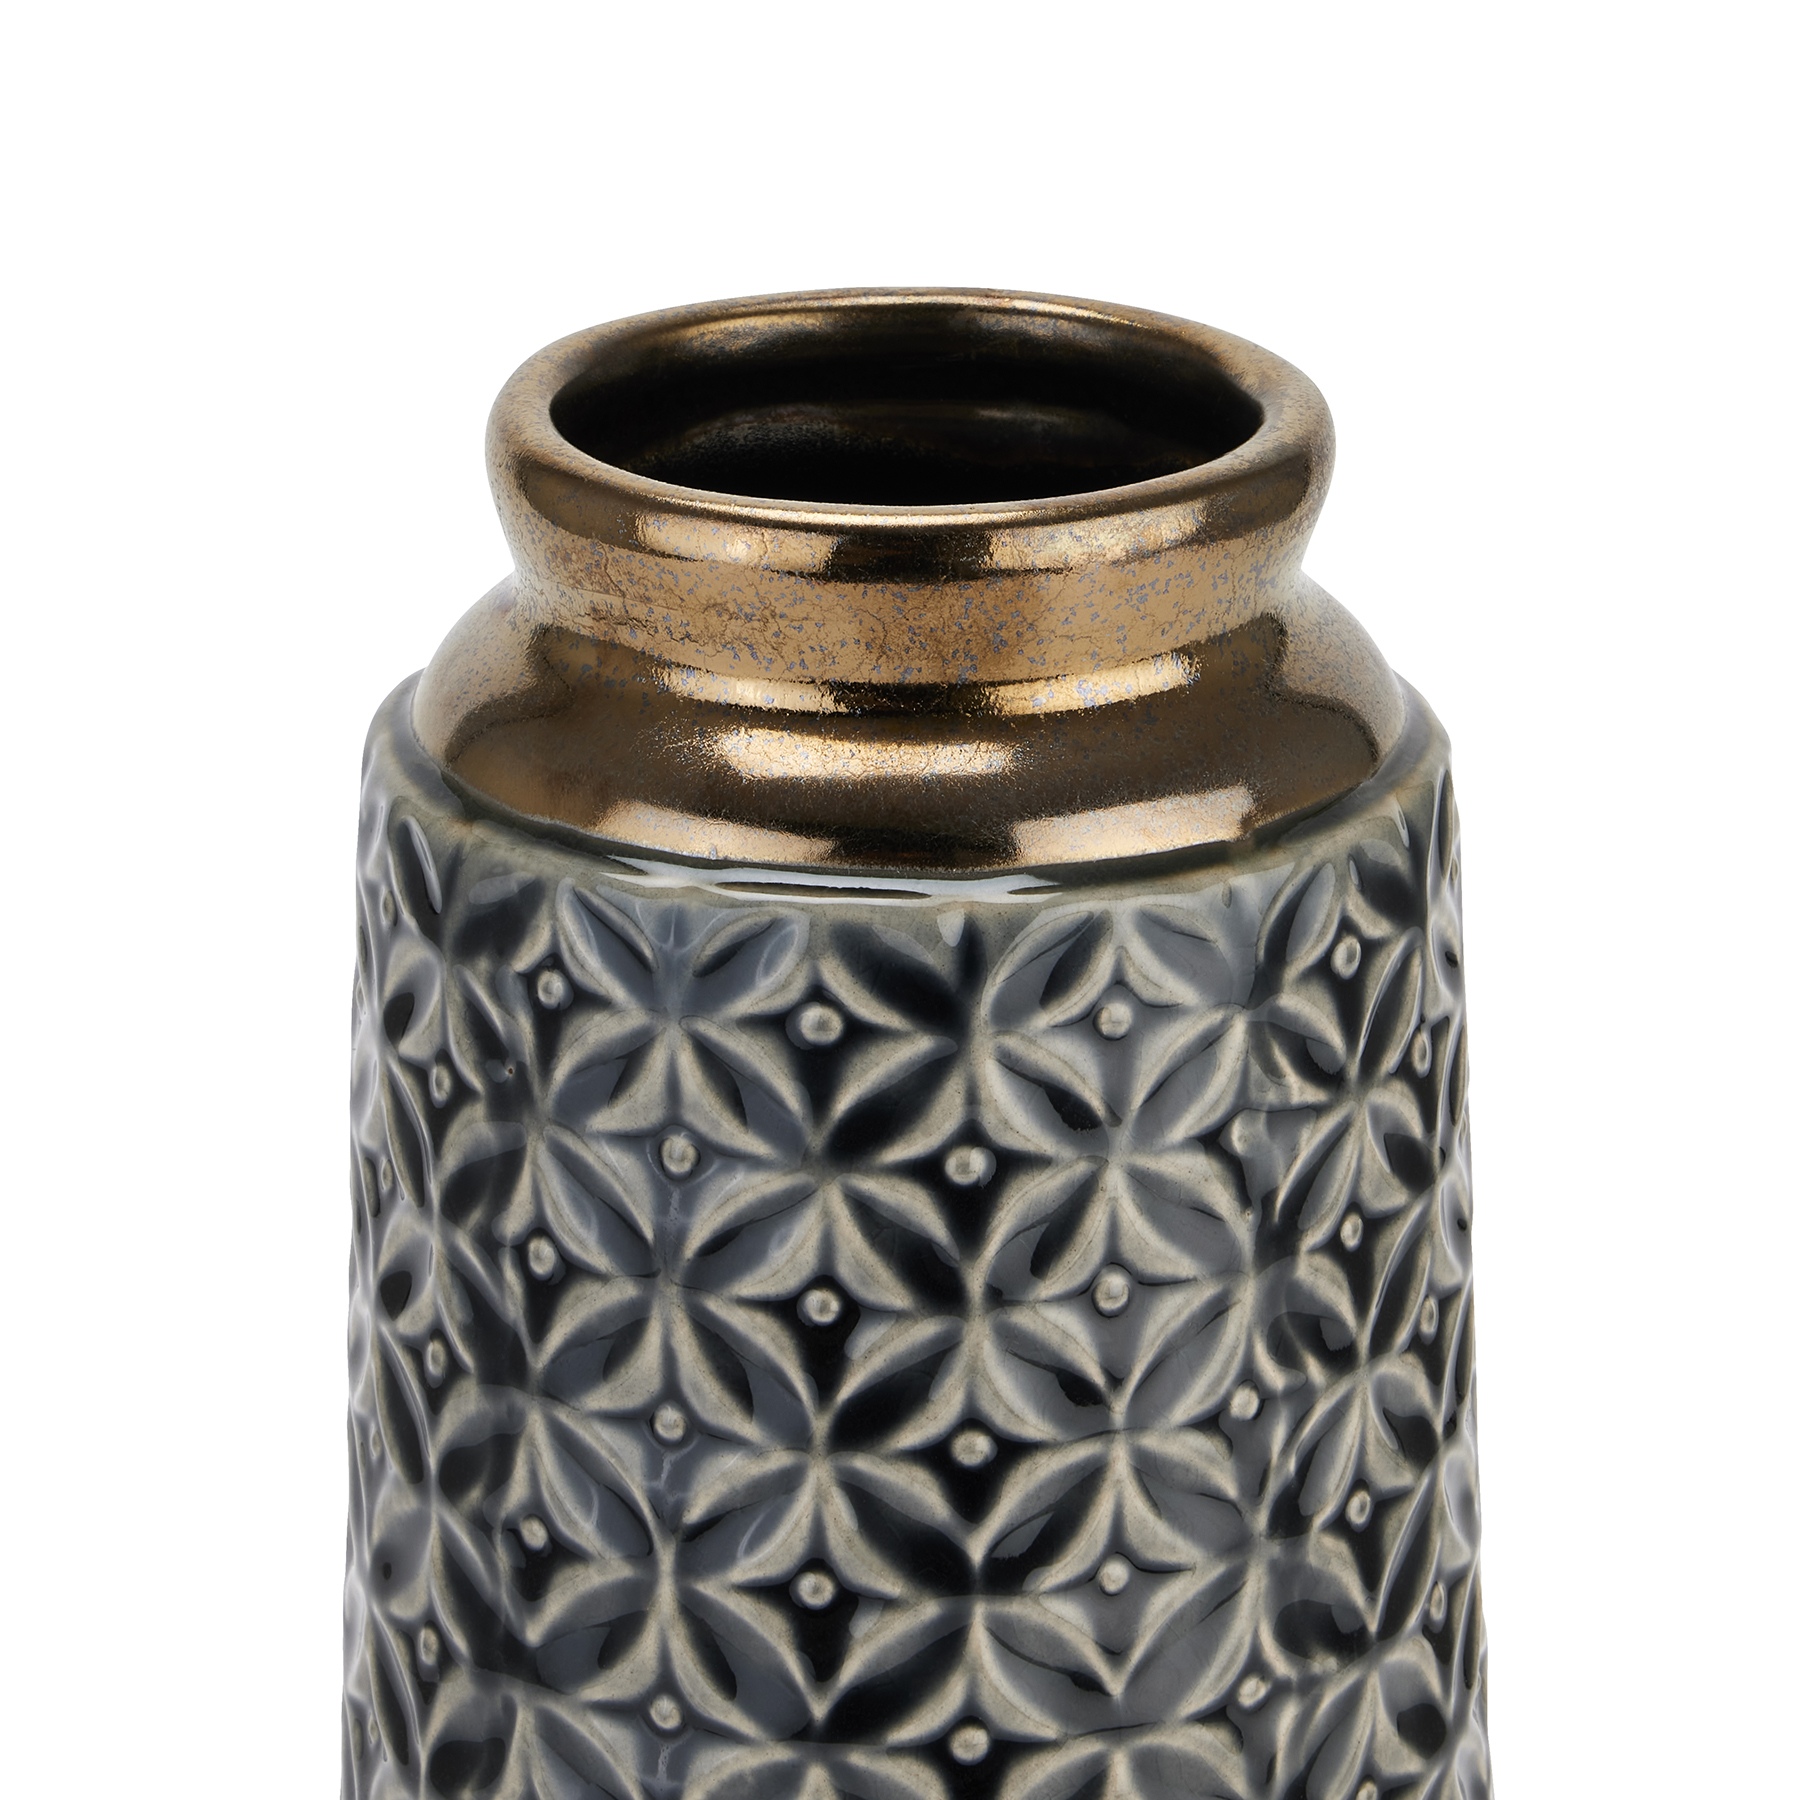 Seville Collecion Lebes Cyclinder Vase - Image 2